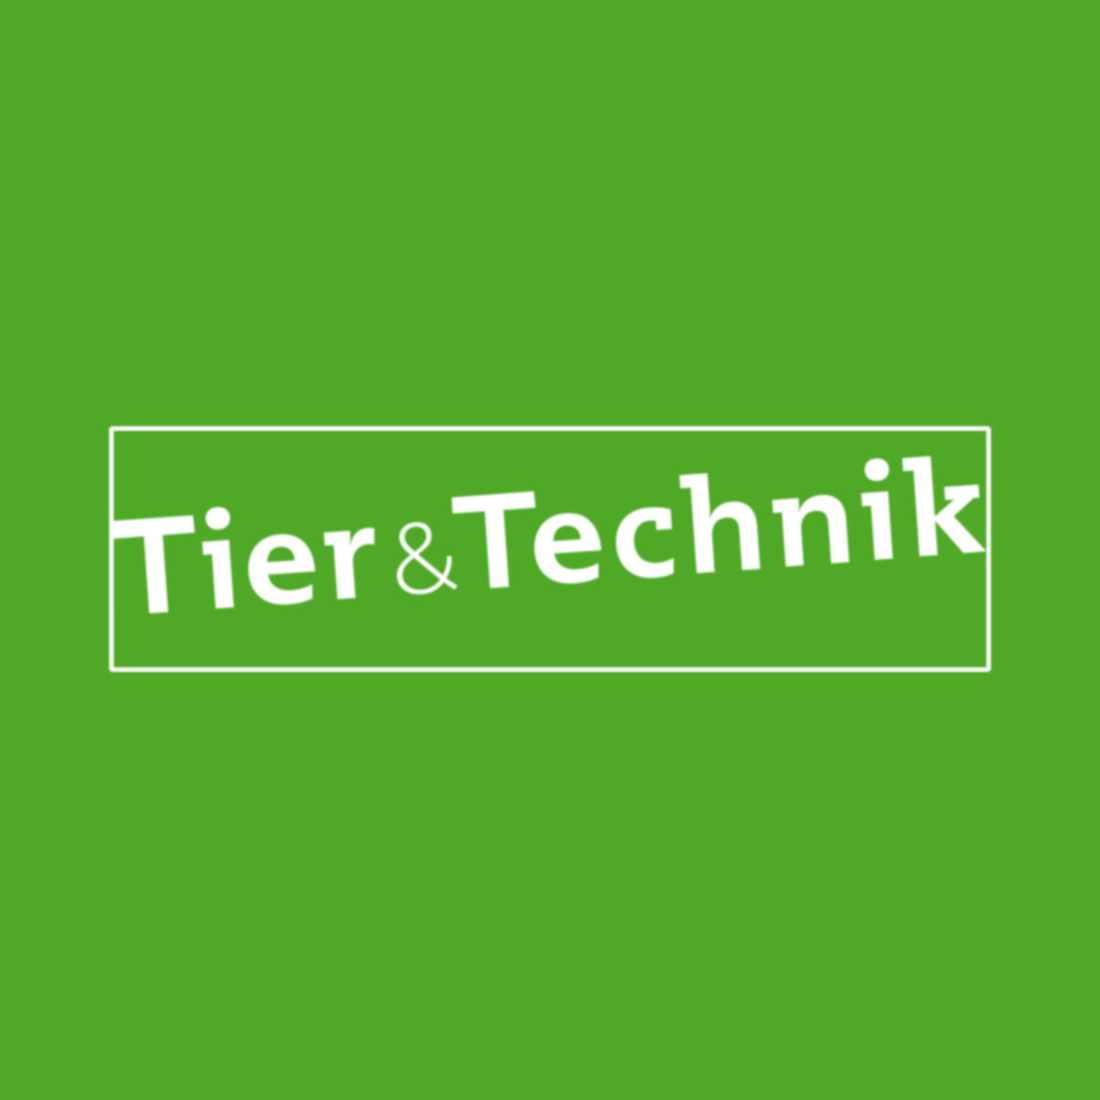 tier_technik1.jpg